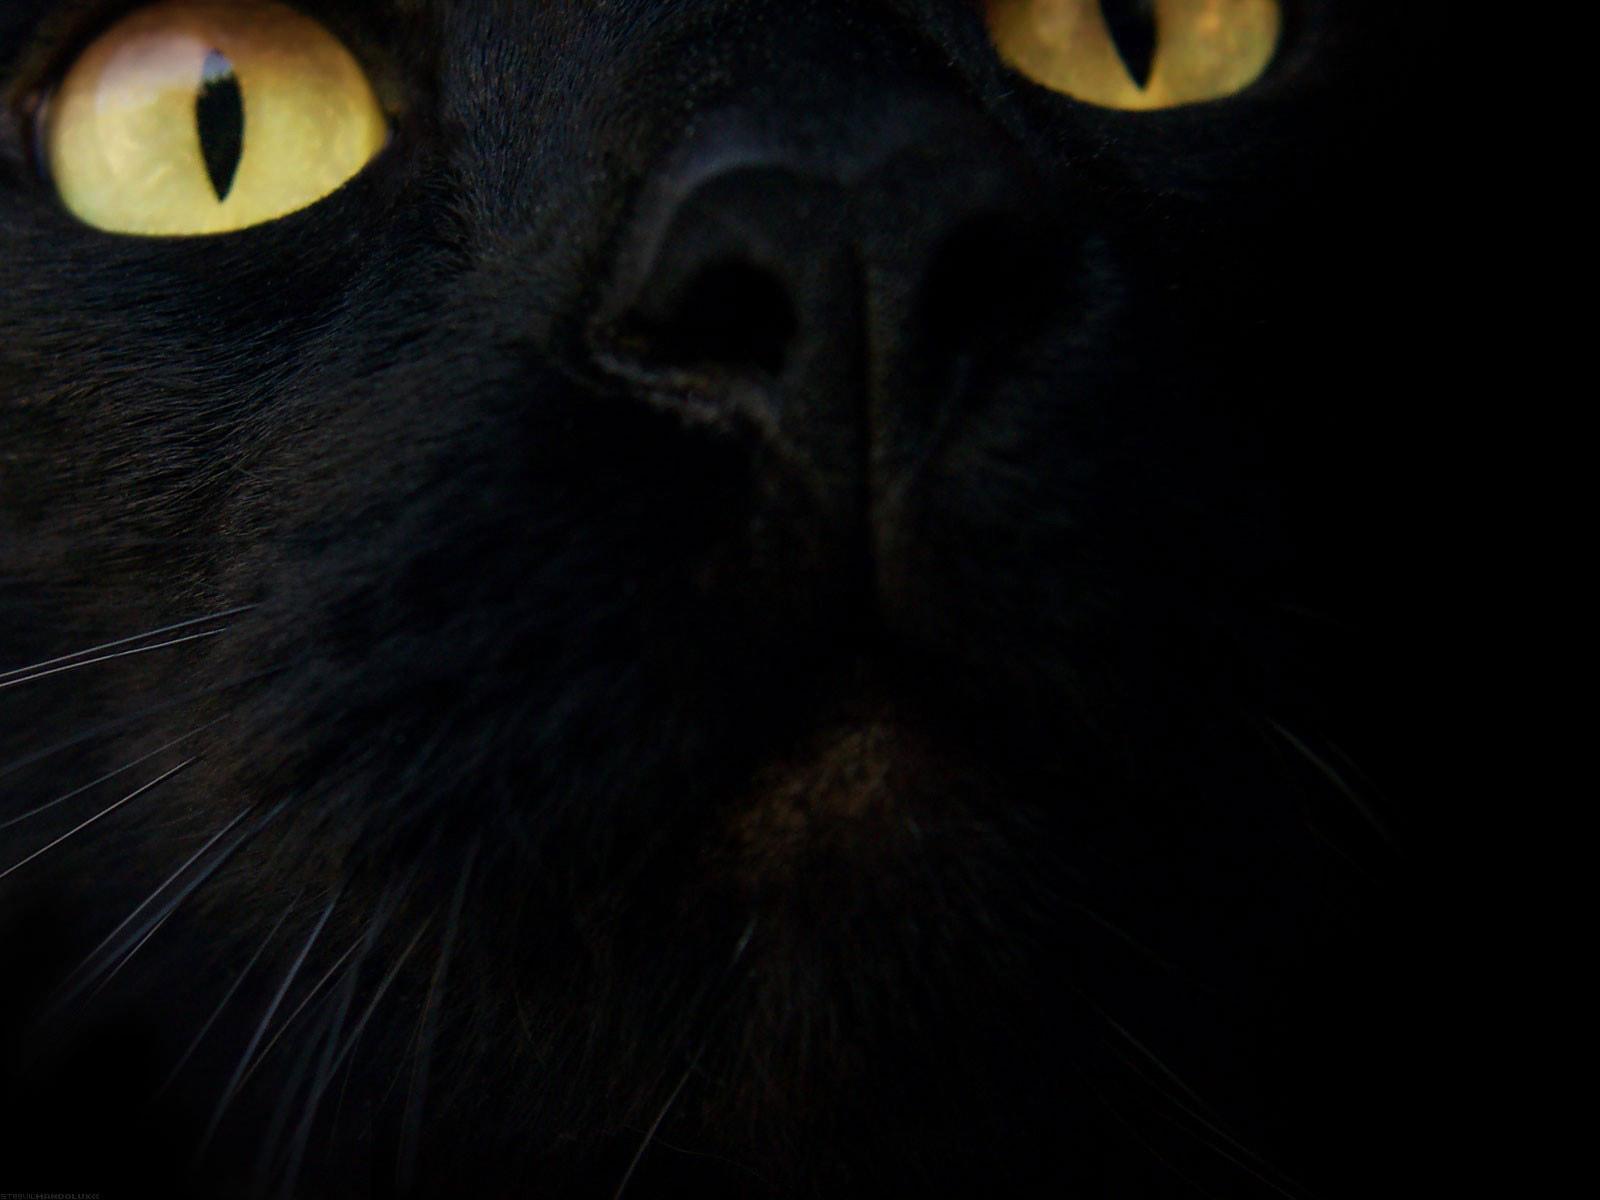 Cool Black Cat Image in 4K Ultra HD